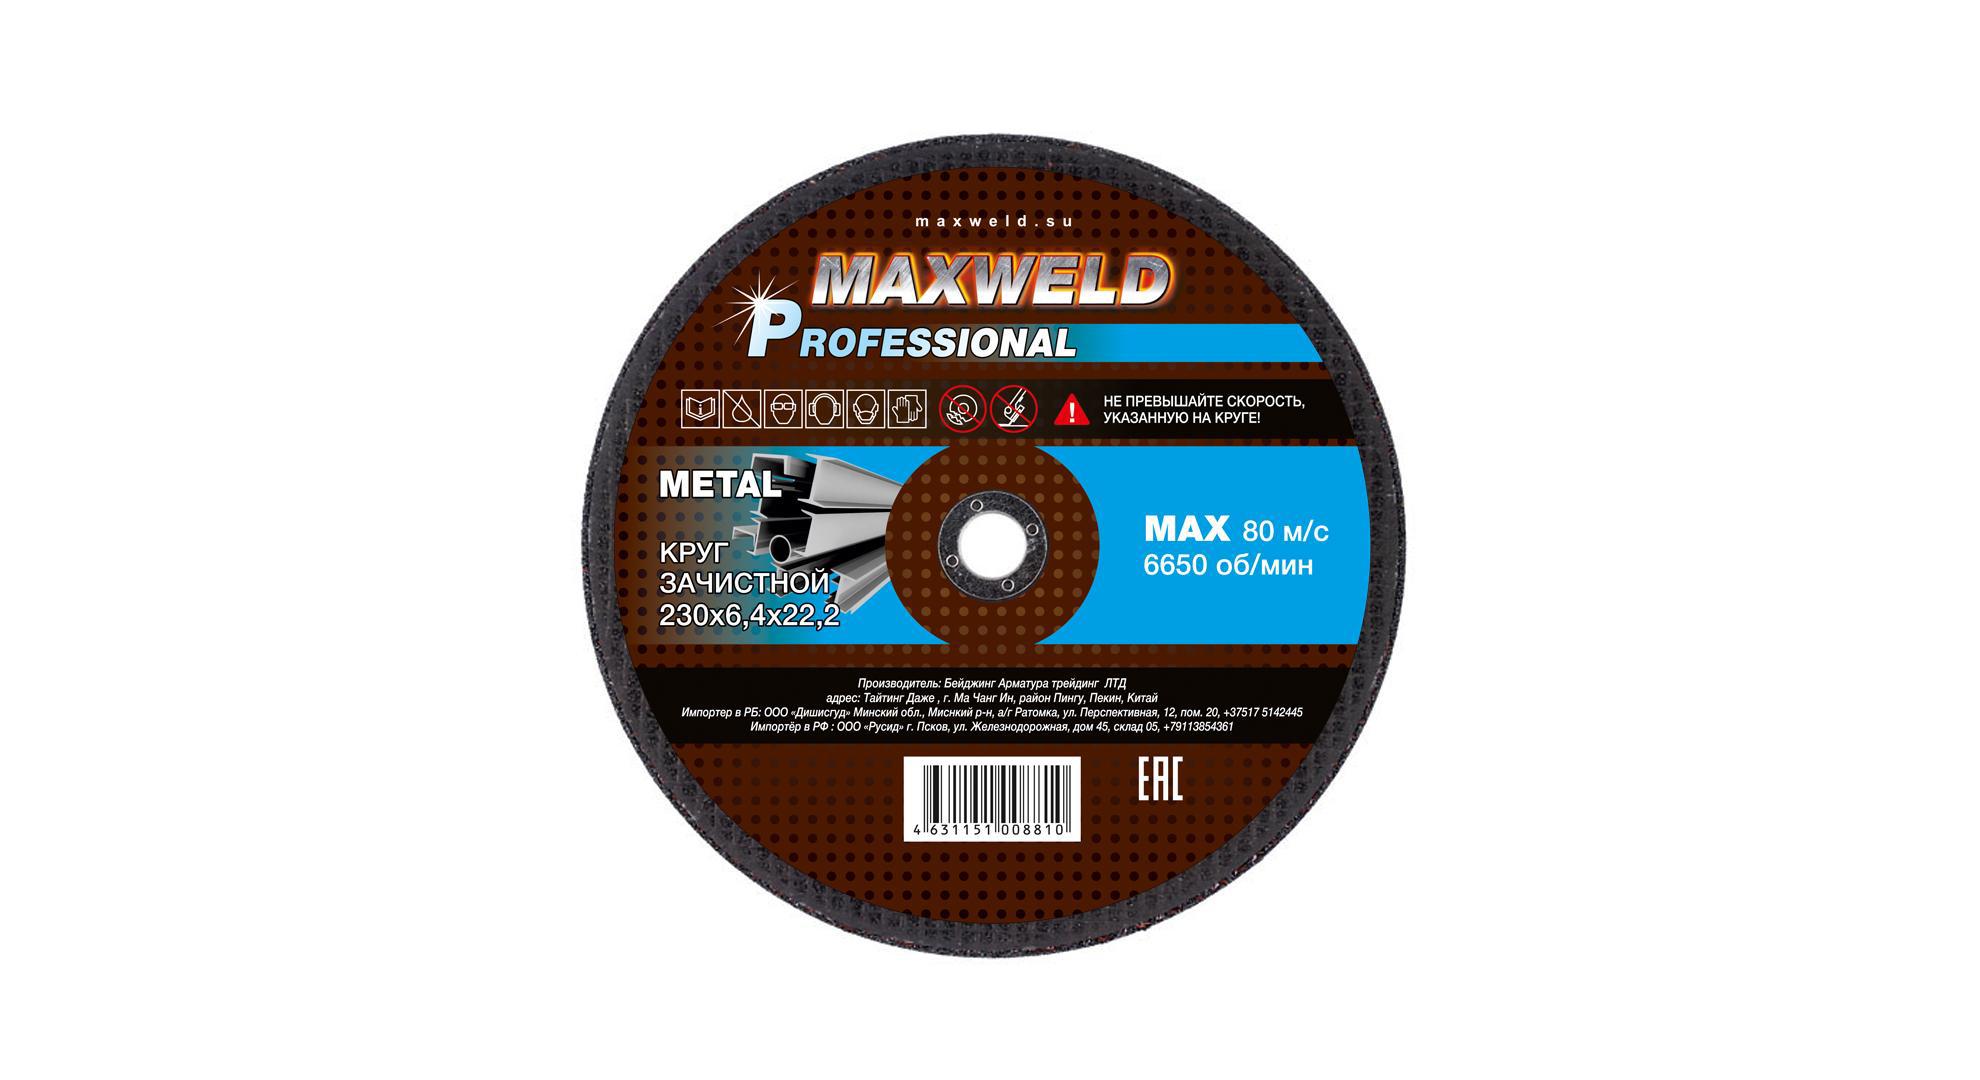 90013830 Круг зачистной для металла 230*6.4 PROFESSIONAL STLM-0085863 MAXWELD